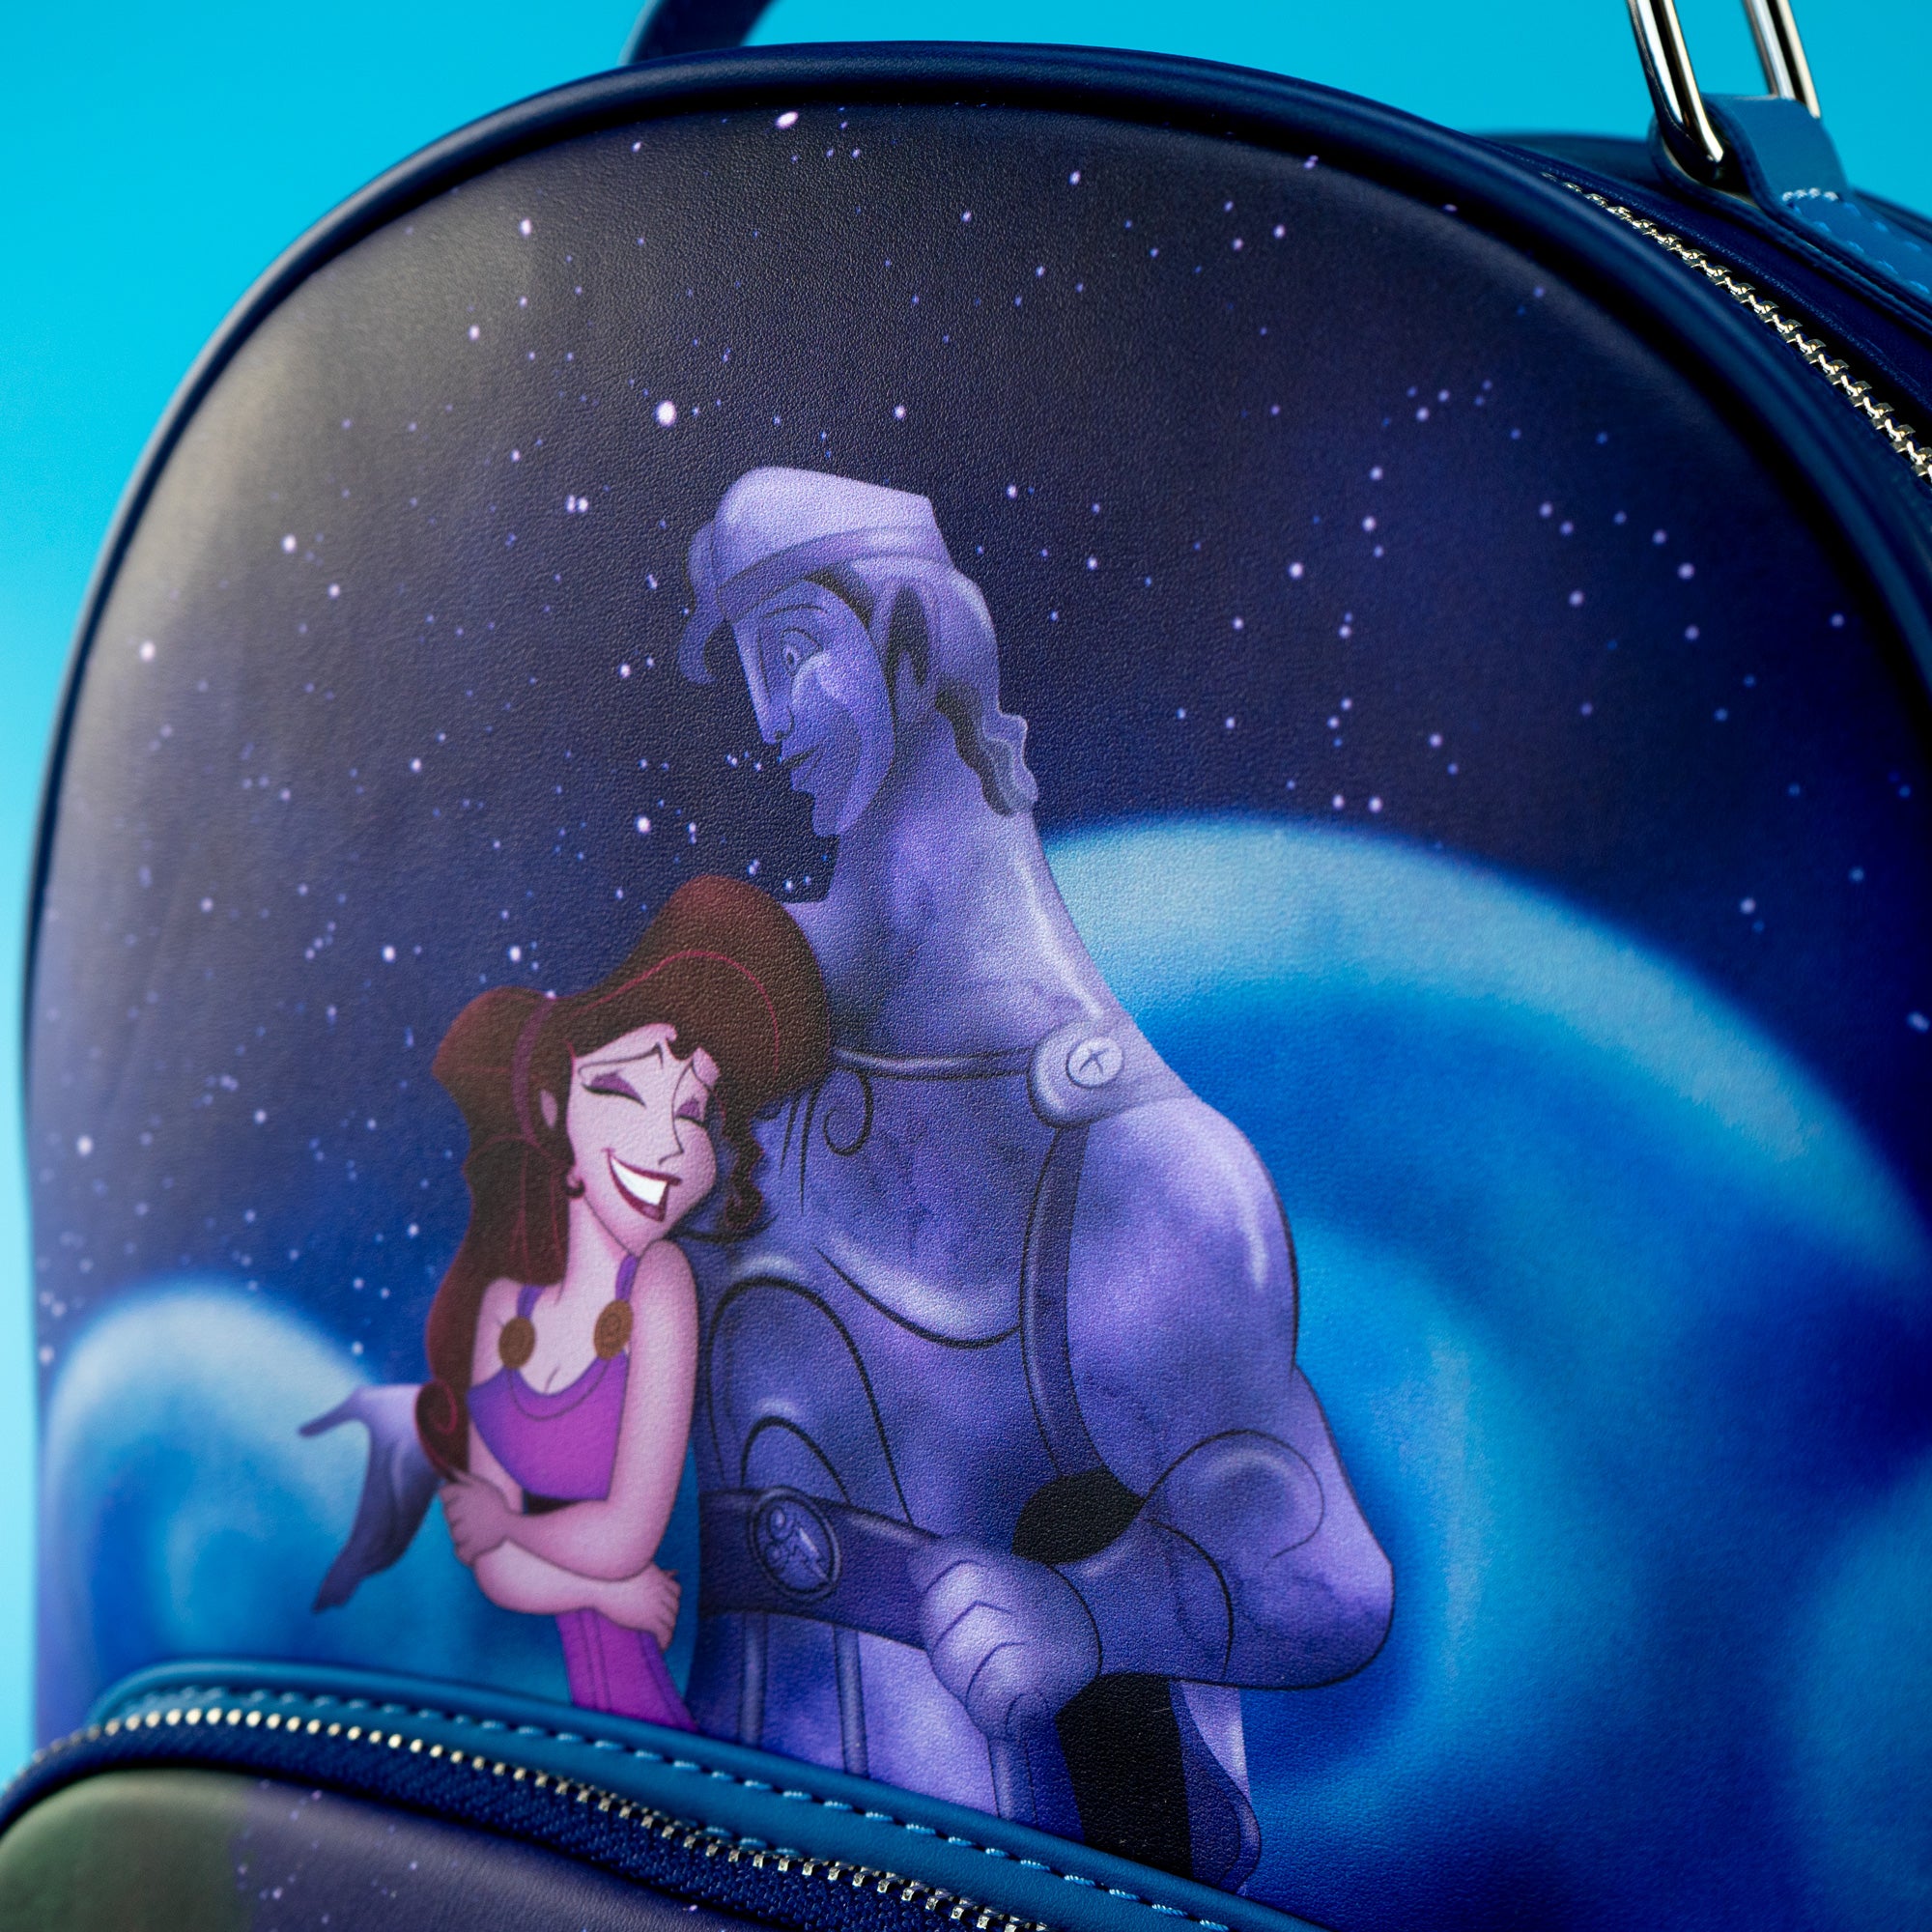 Loungefly x Disney Hercules, Megara (Meg) and Muses Mini Backpack